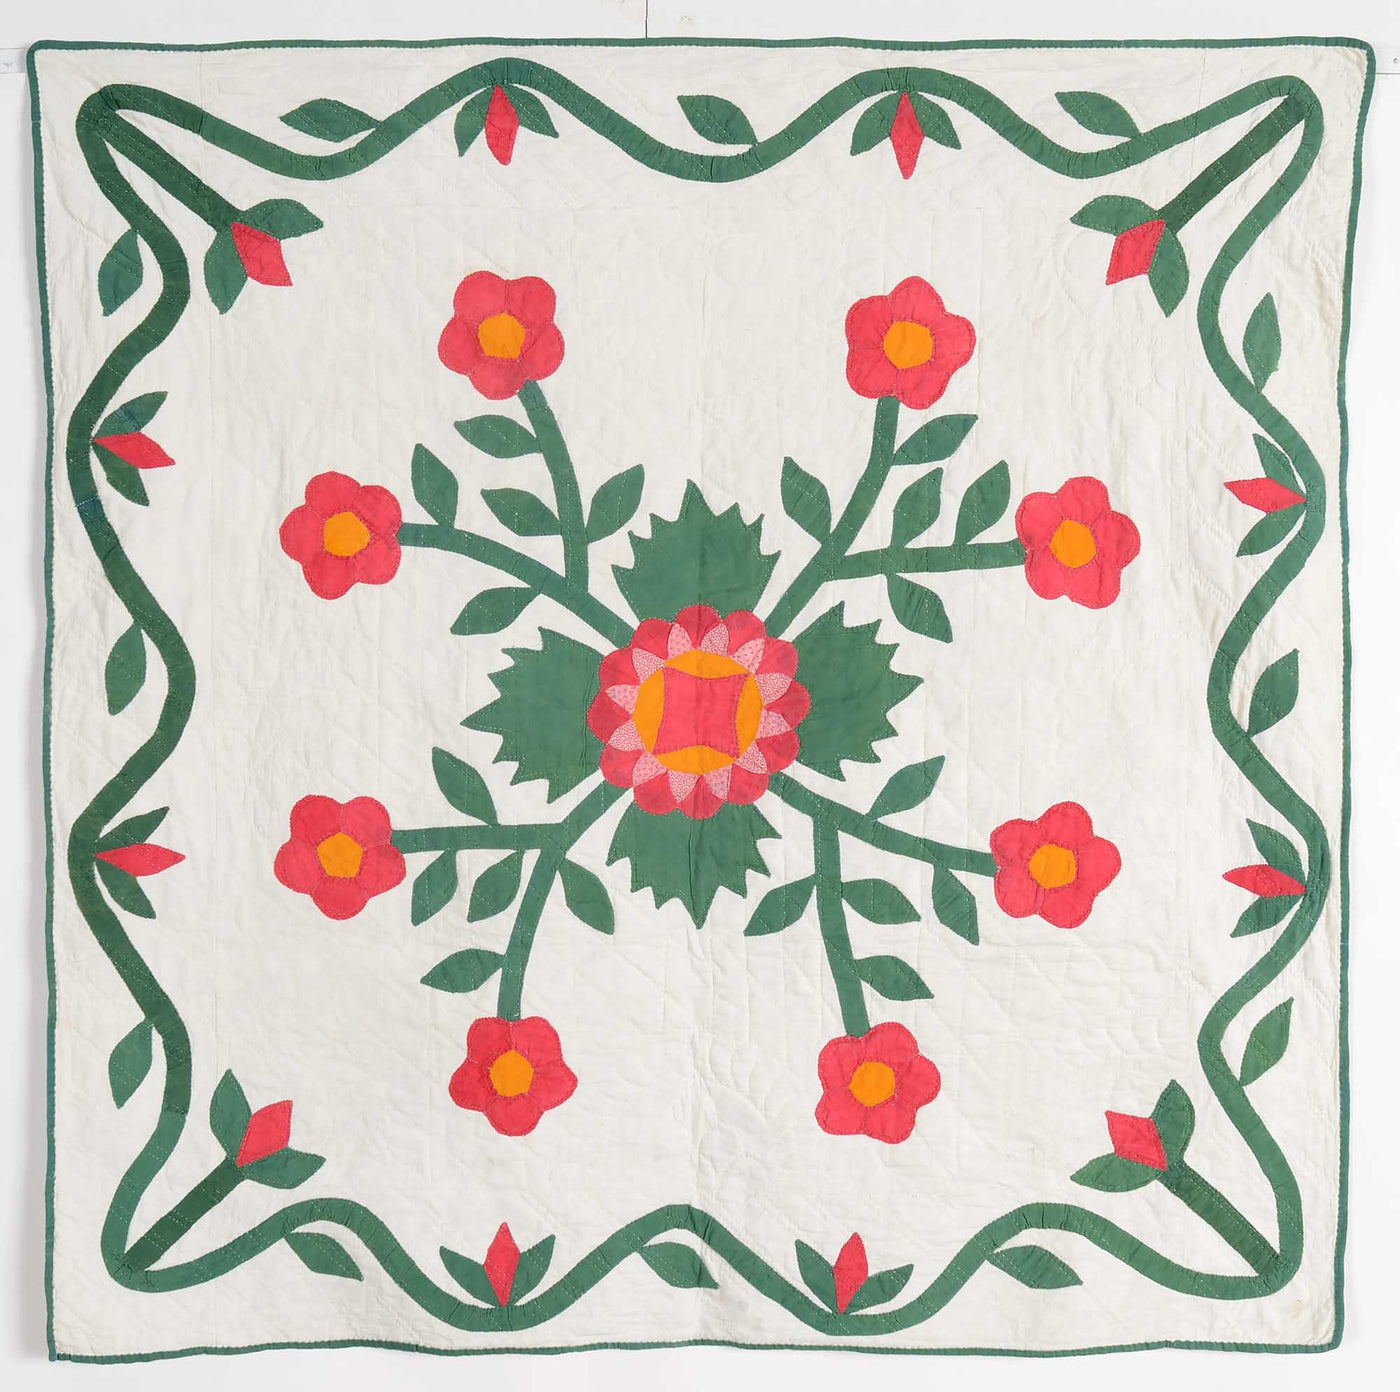 rose-of-sharon-crib-quilt-1442351